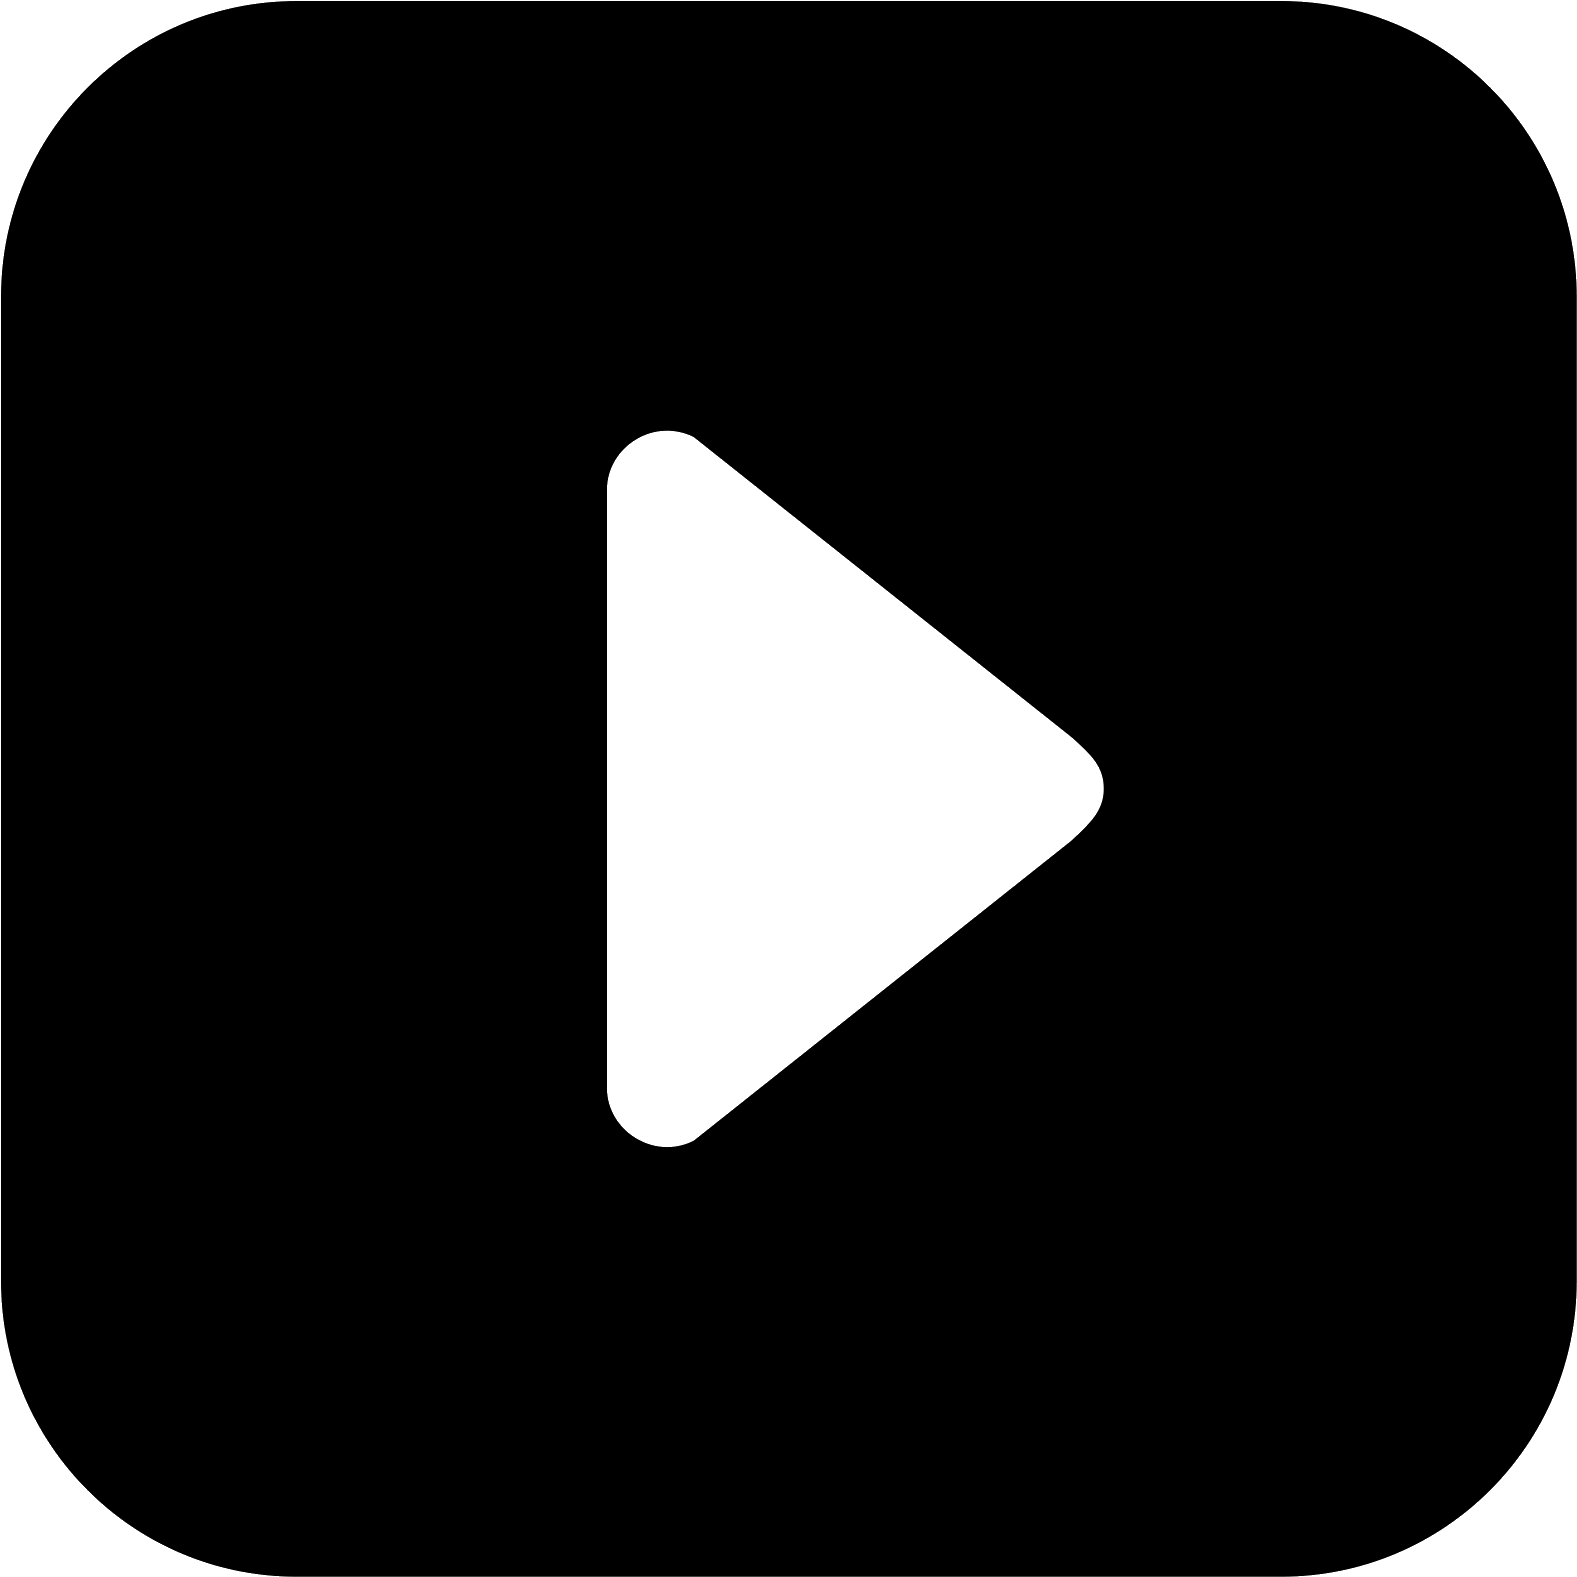 Next Icon - Youtube Logo Black And White Png (1600x1600)